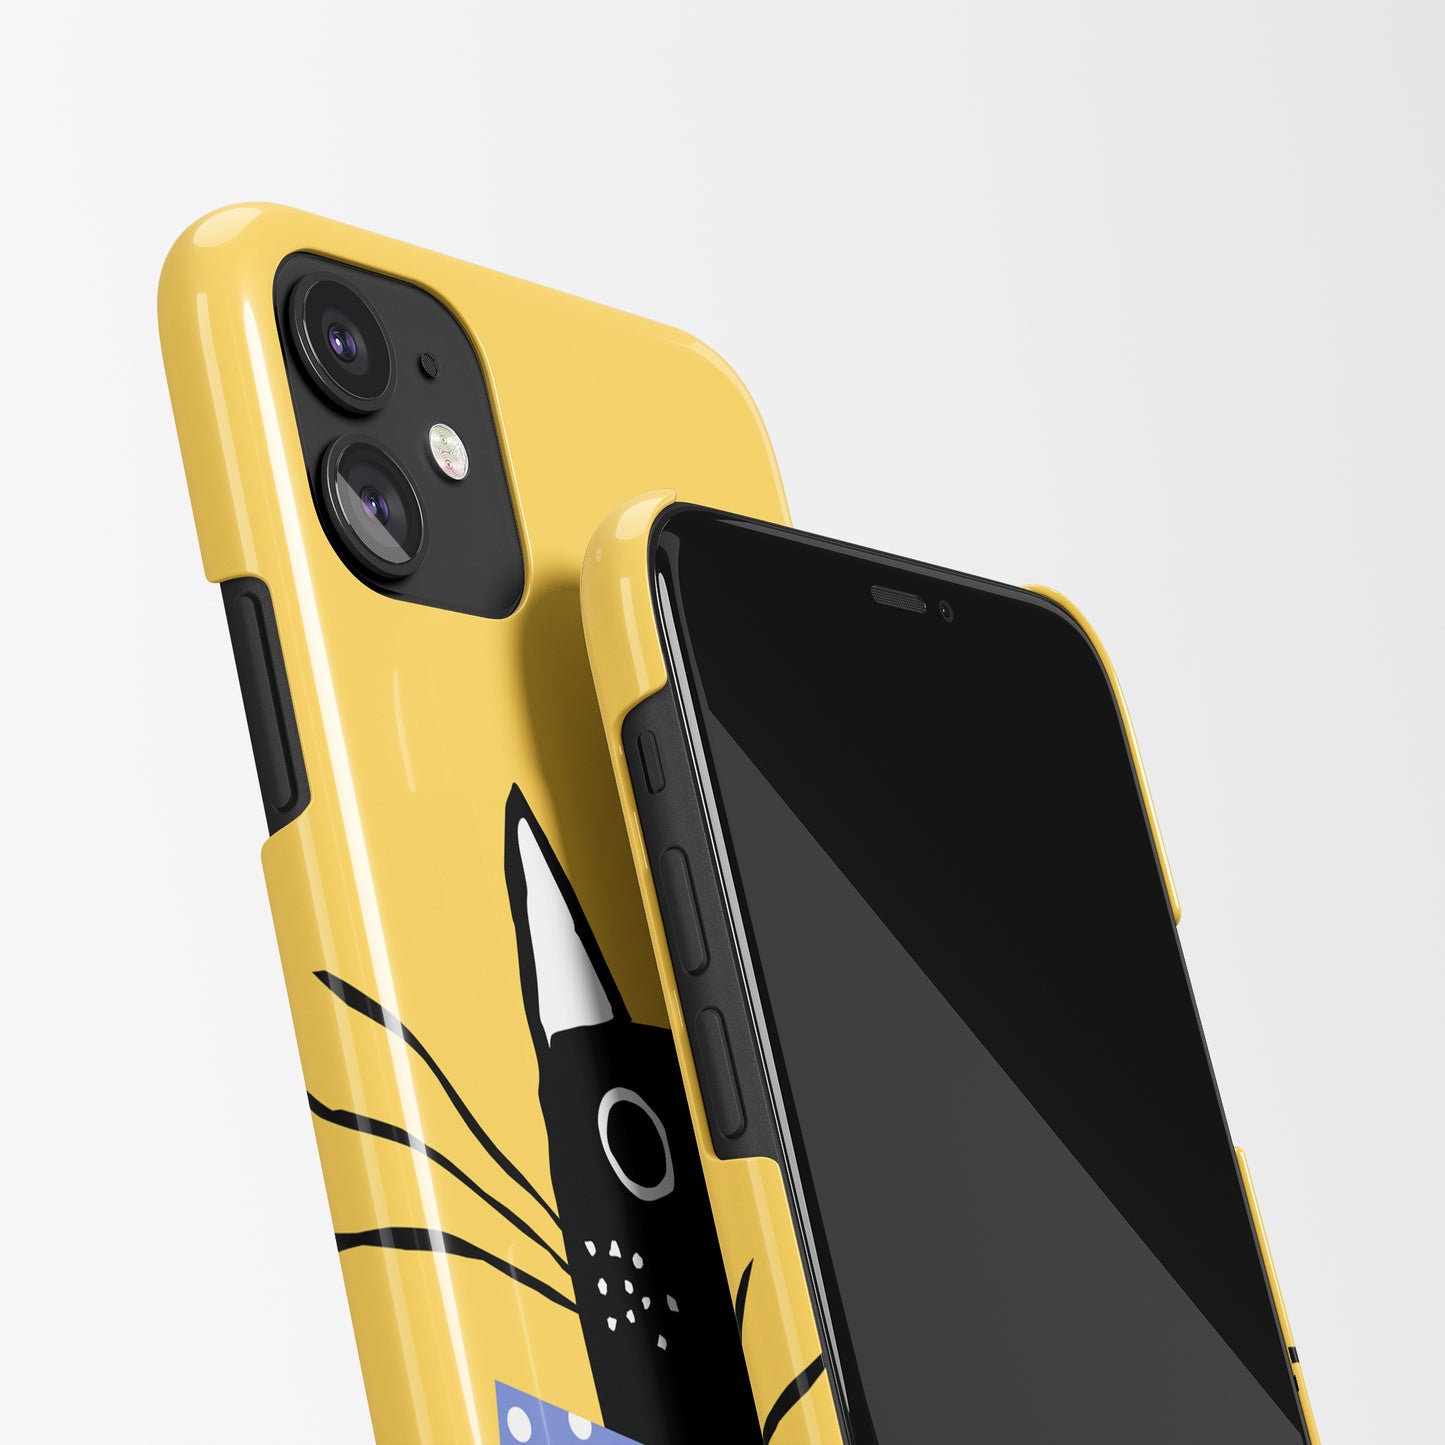 Black Cat Drawing iPhone Case